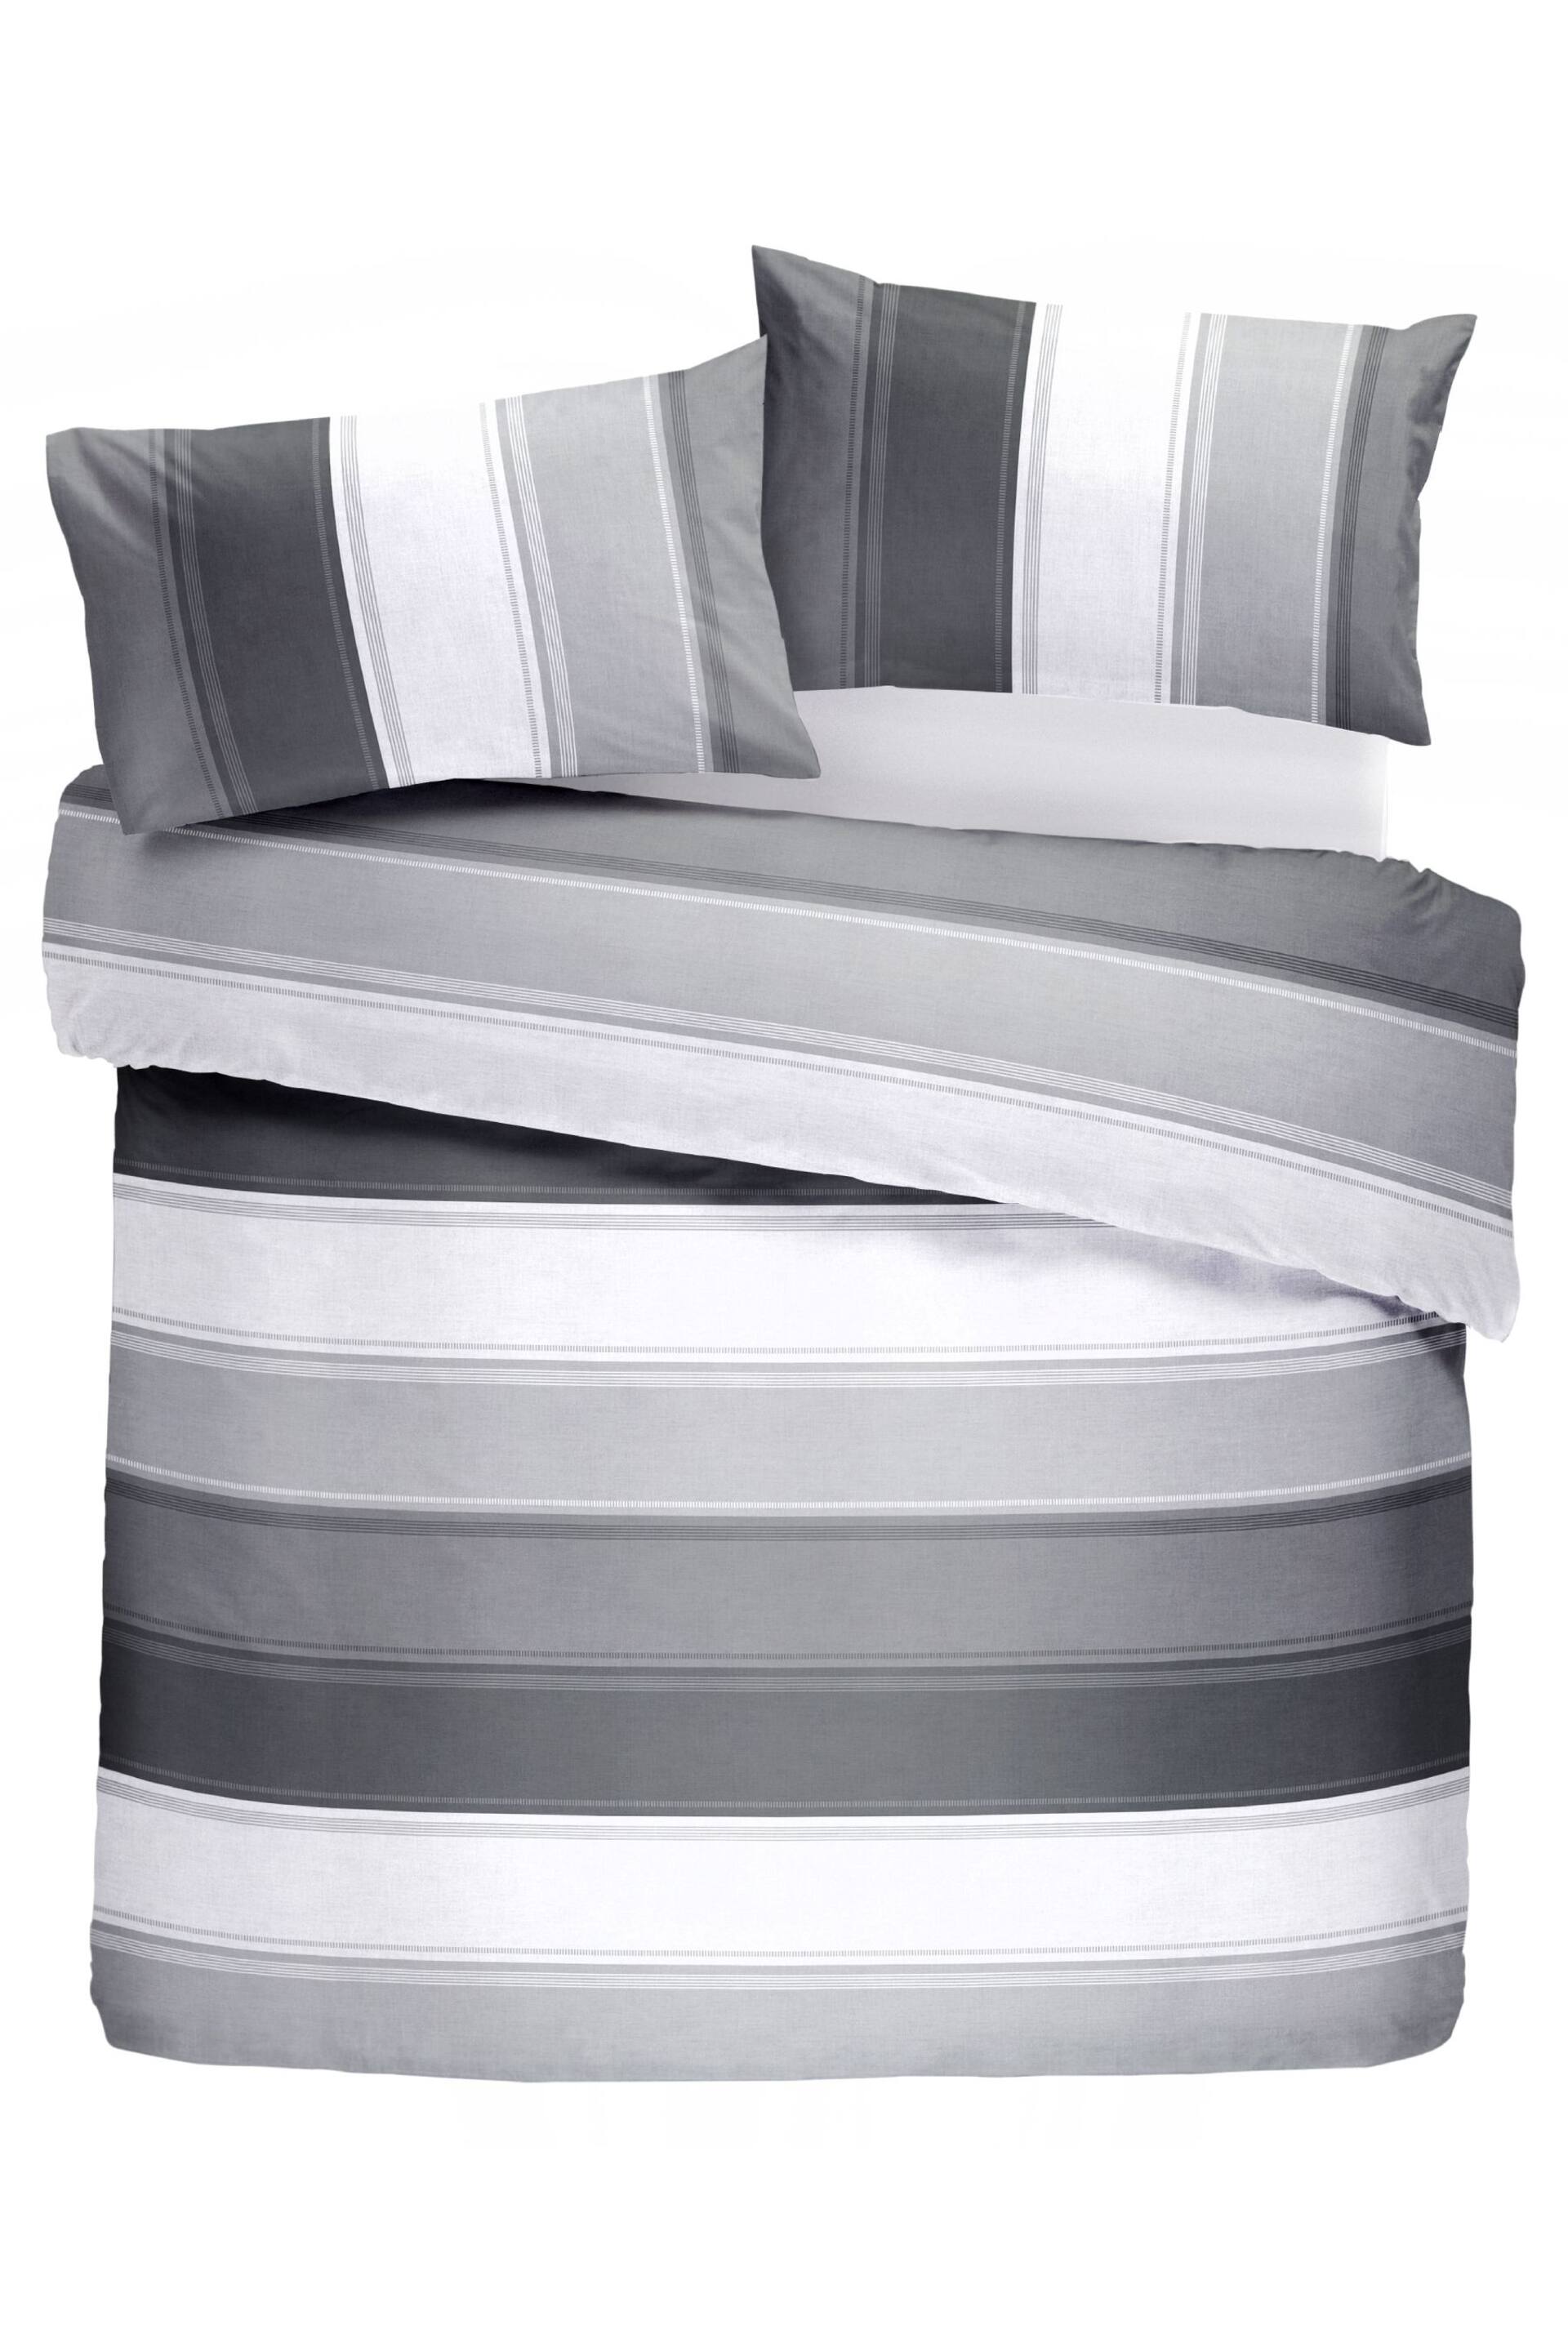 Fusion Grey Betley Duvet Cover and Pillowcase Set - Image 2 of 2